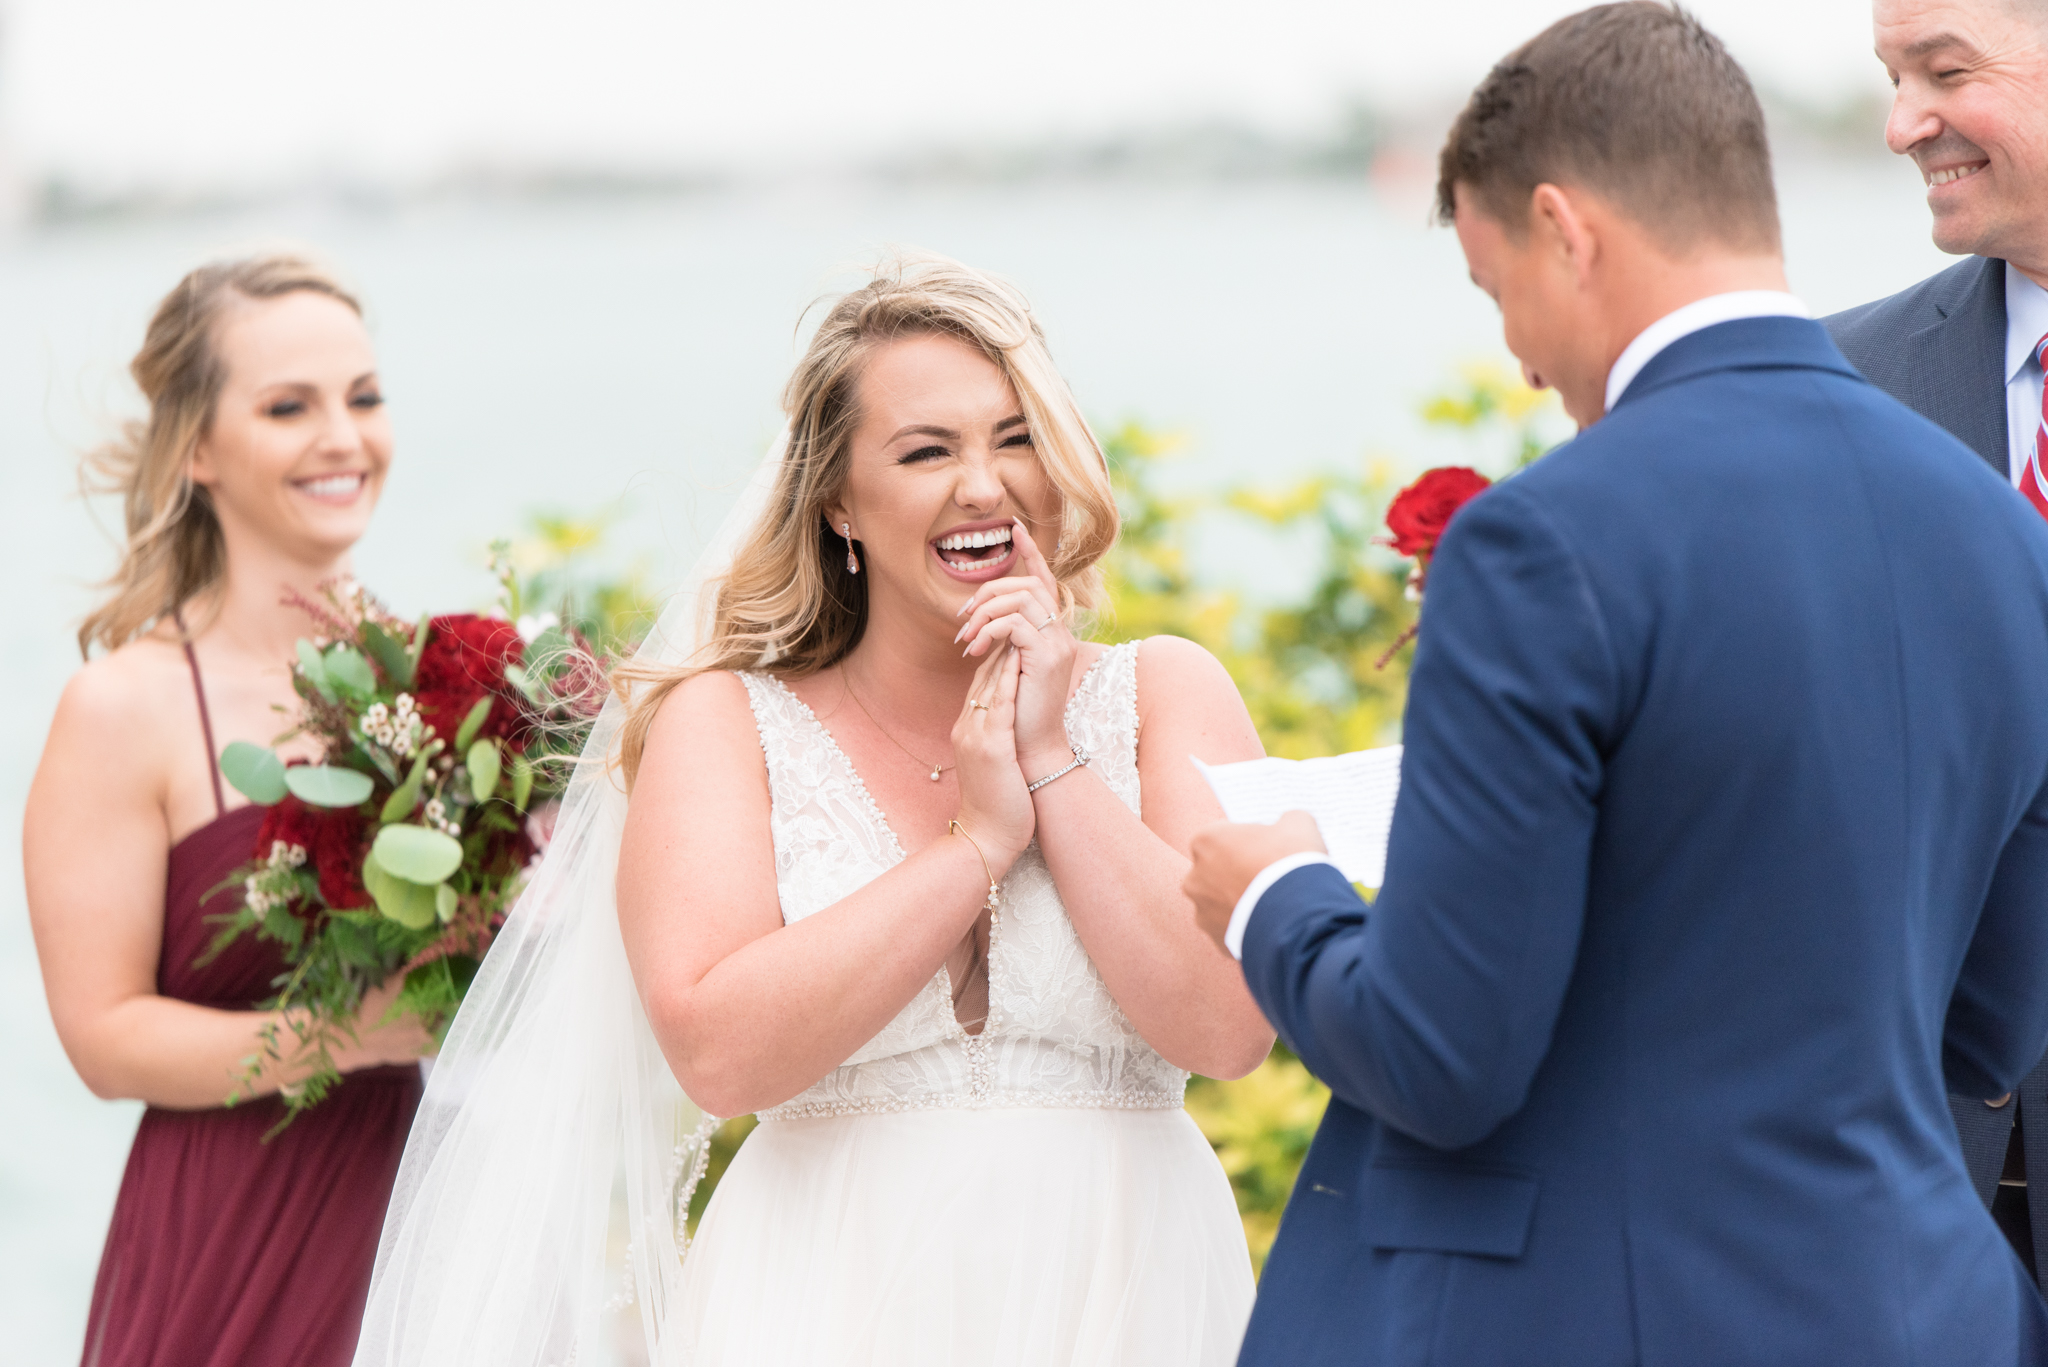 Bride laughs during wedding ceremony.